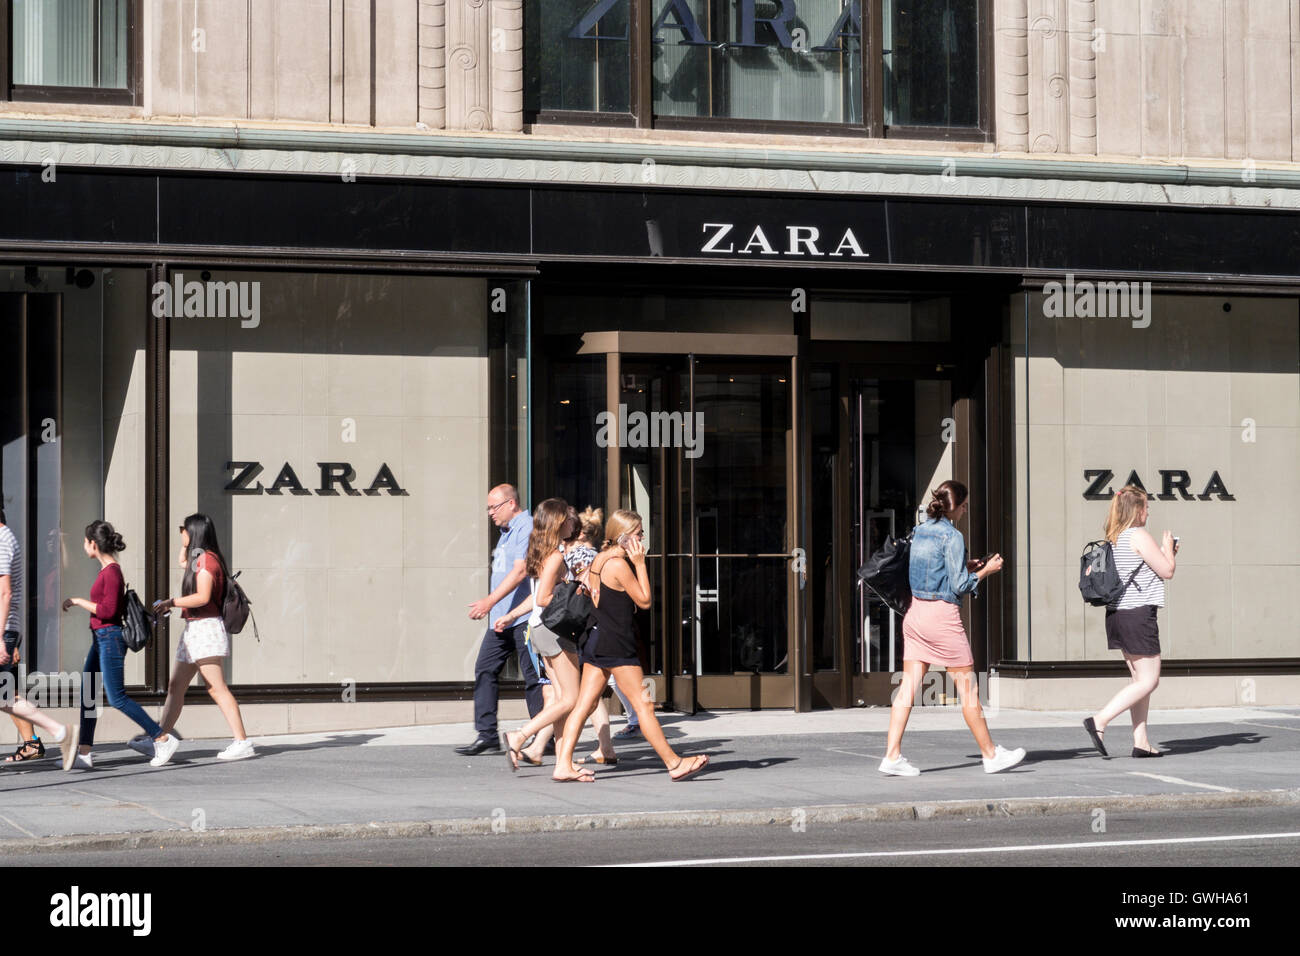 Zara espana s a hi-res stock photography and images - Alamy